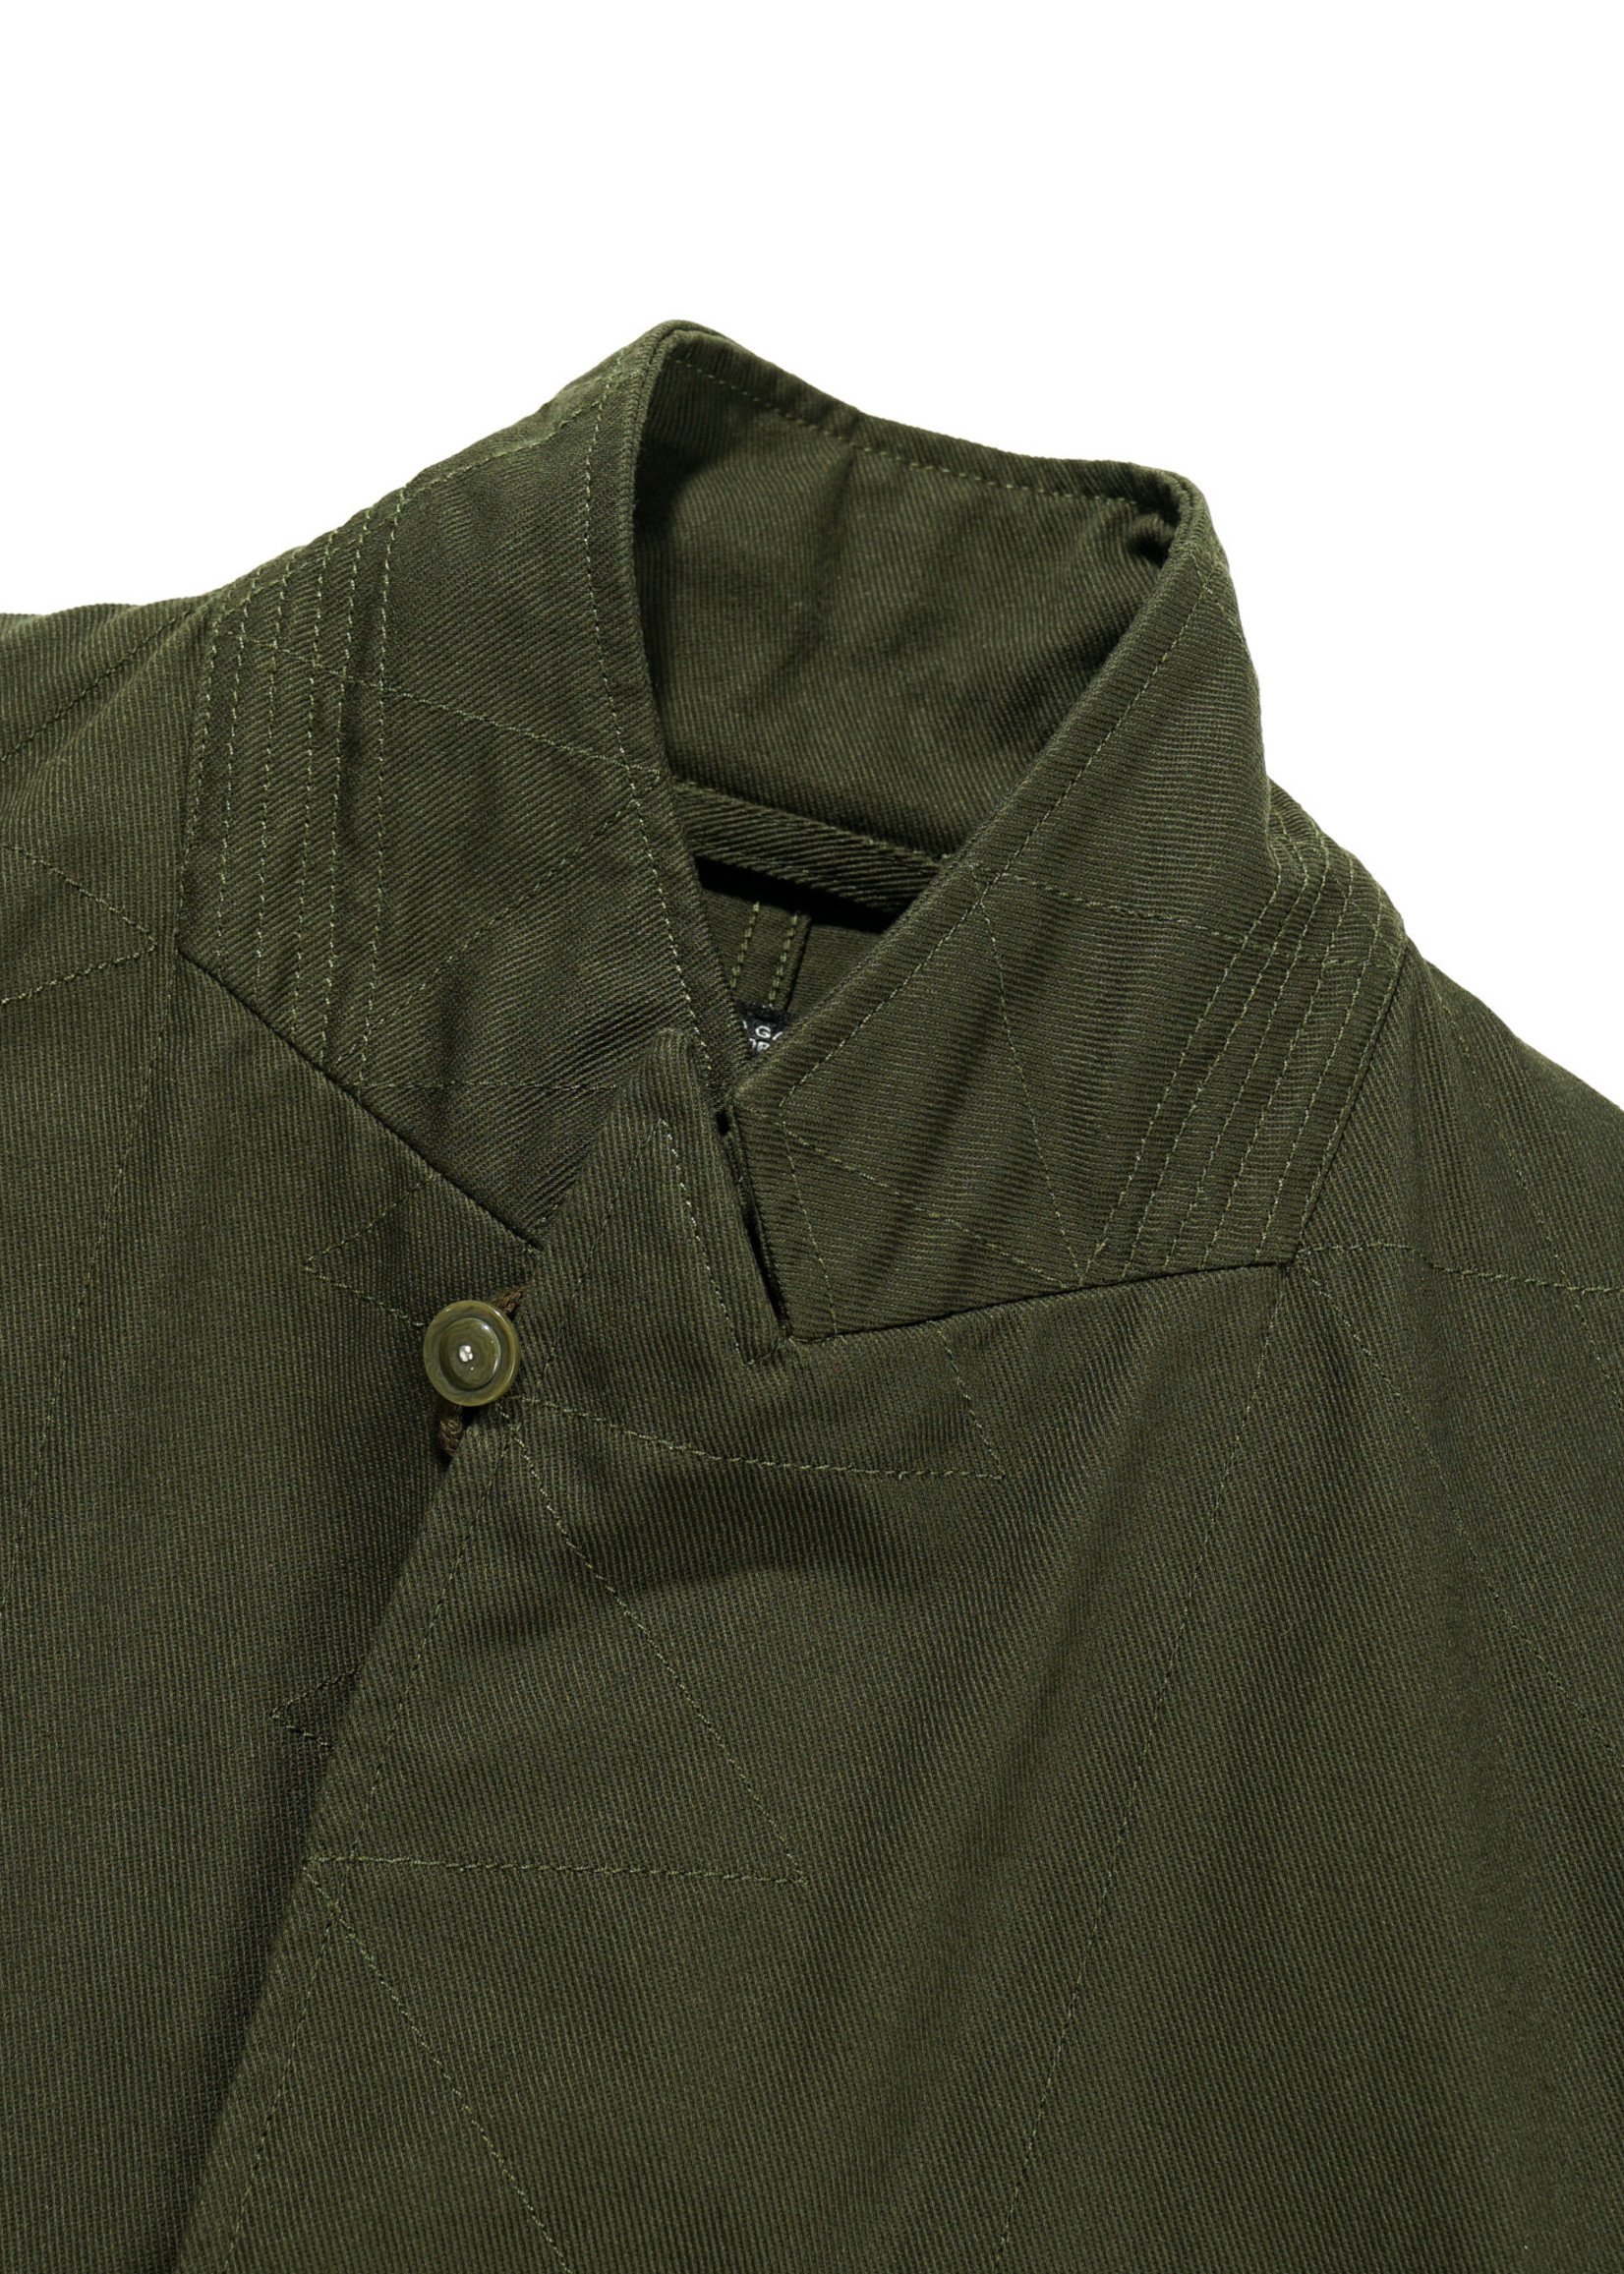 Engineered Garments EG Bedford Jacket Olive Cotton Heavy Twill